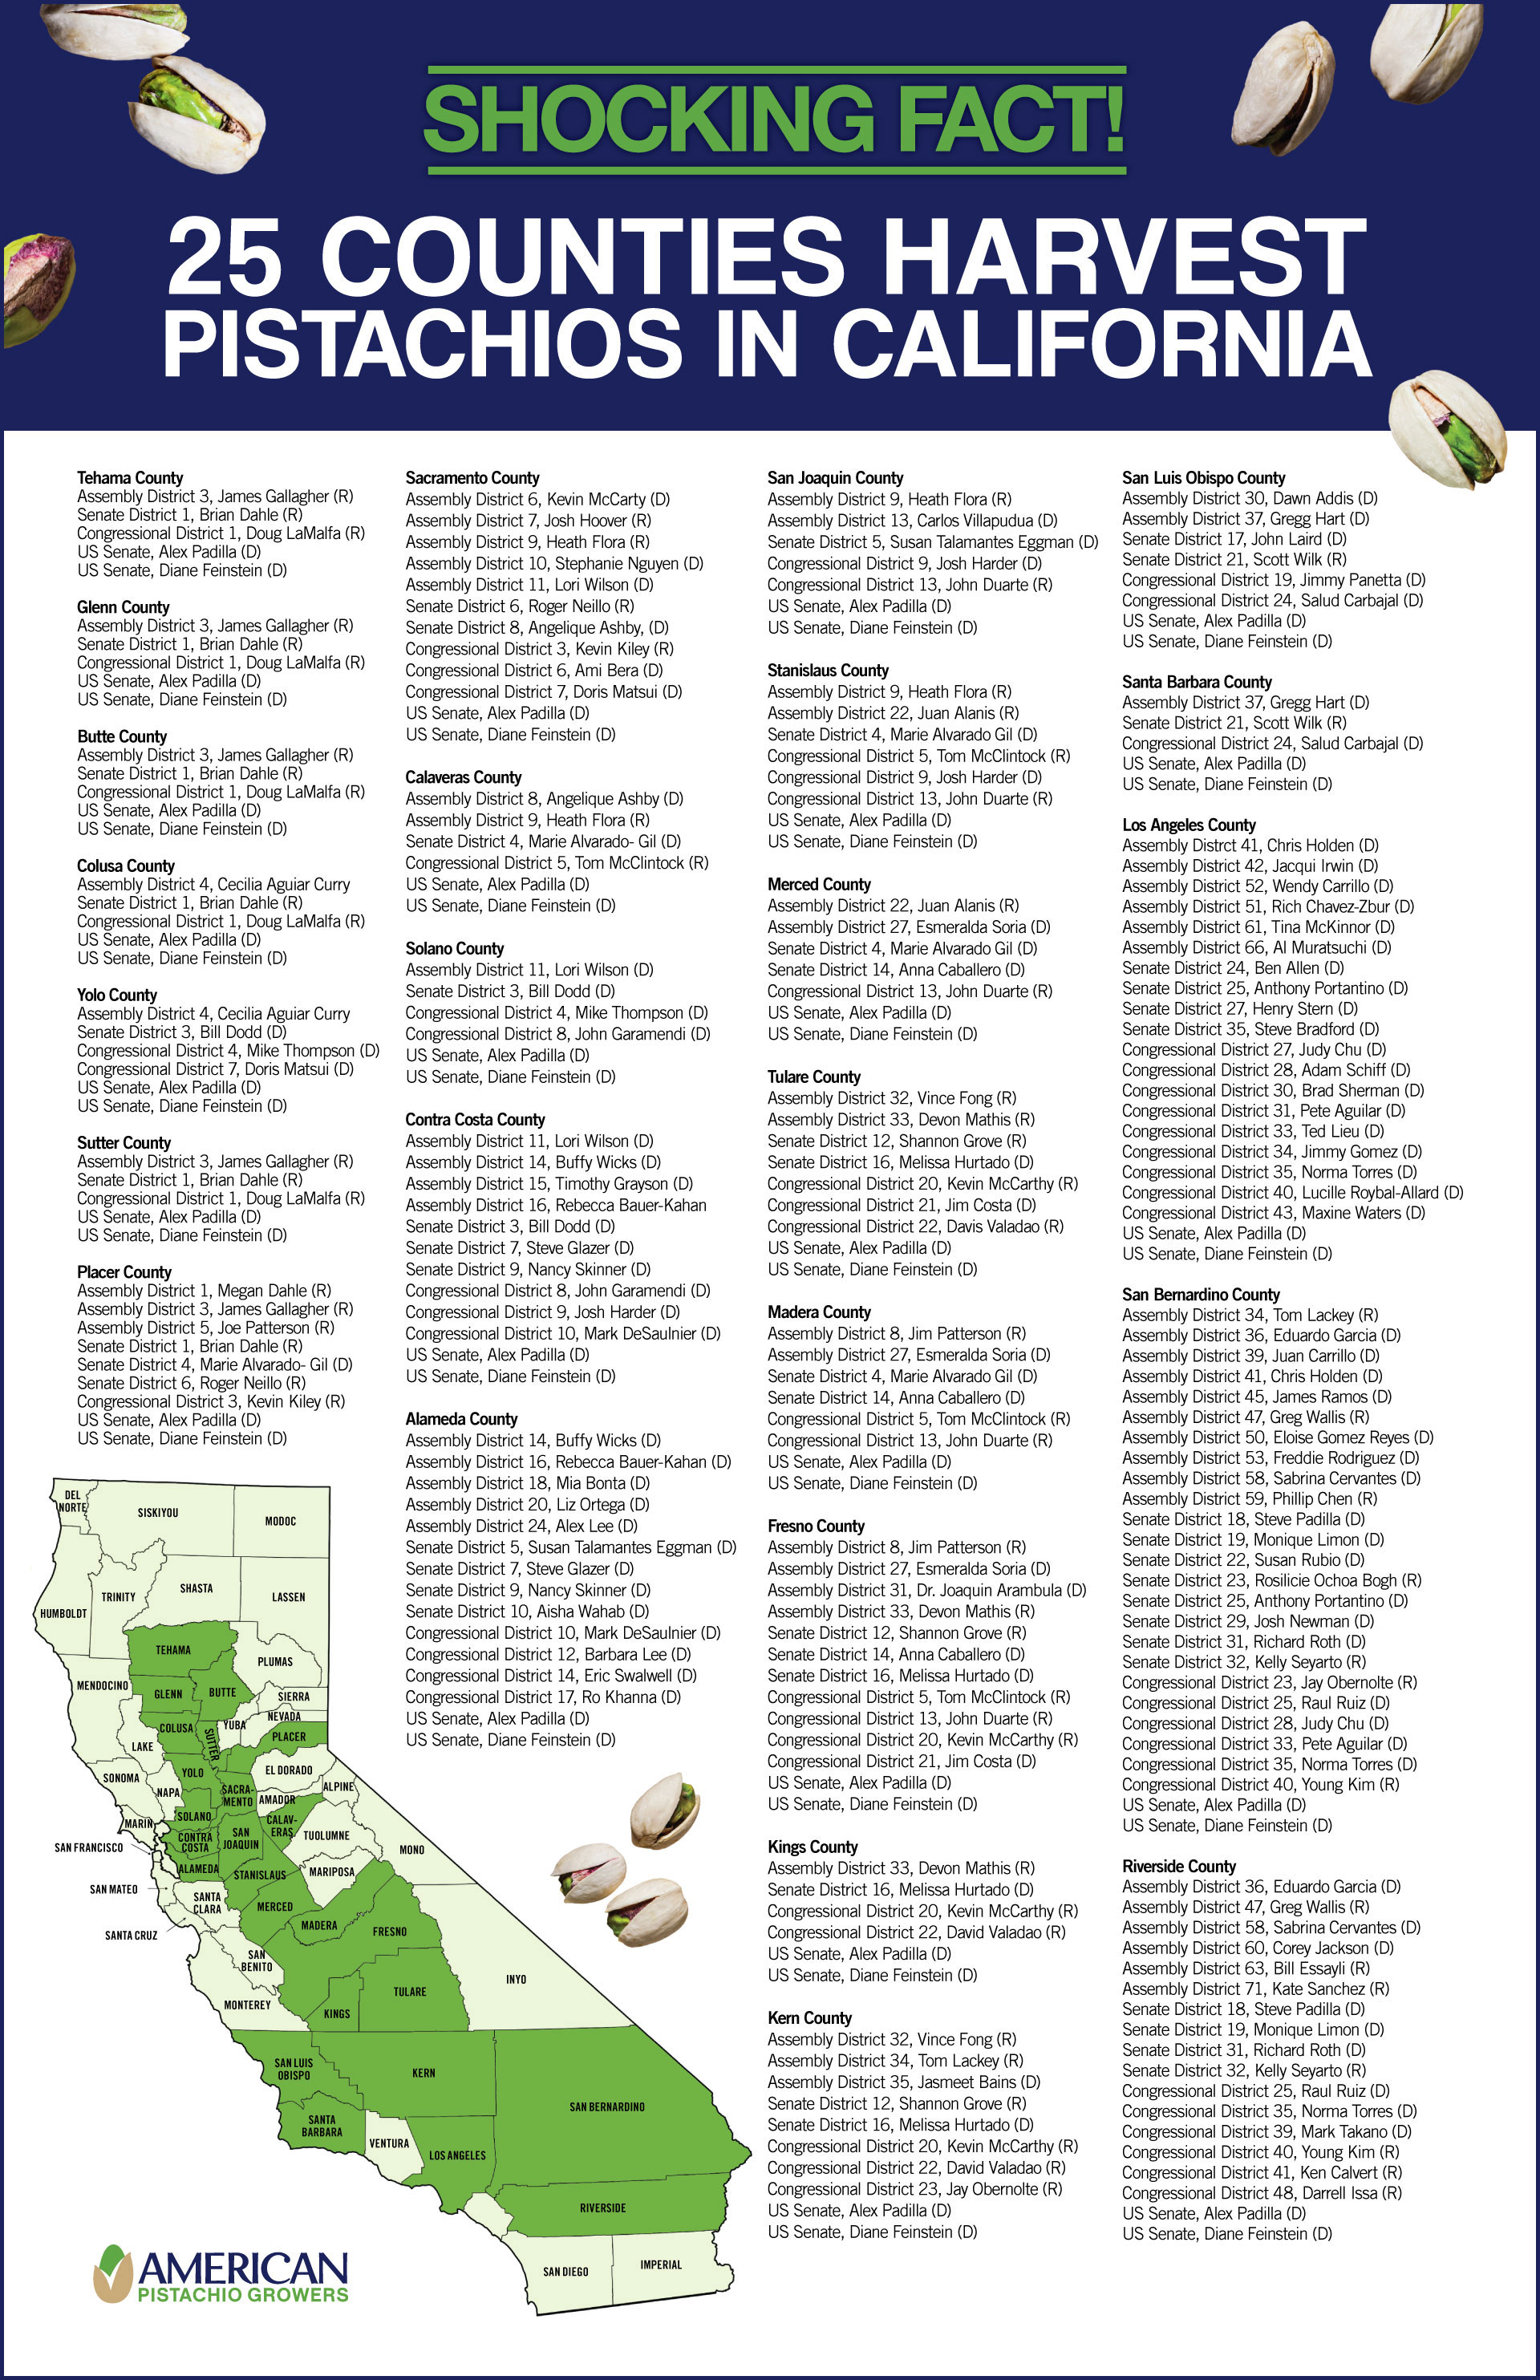 Counties in California Harvesting Pistachios